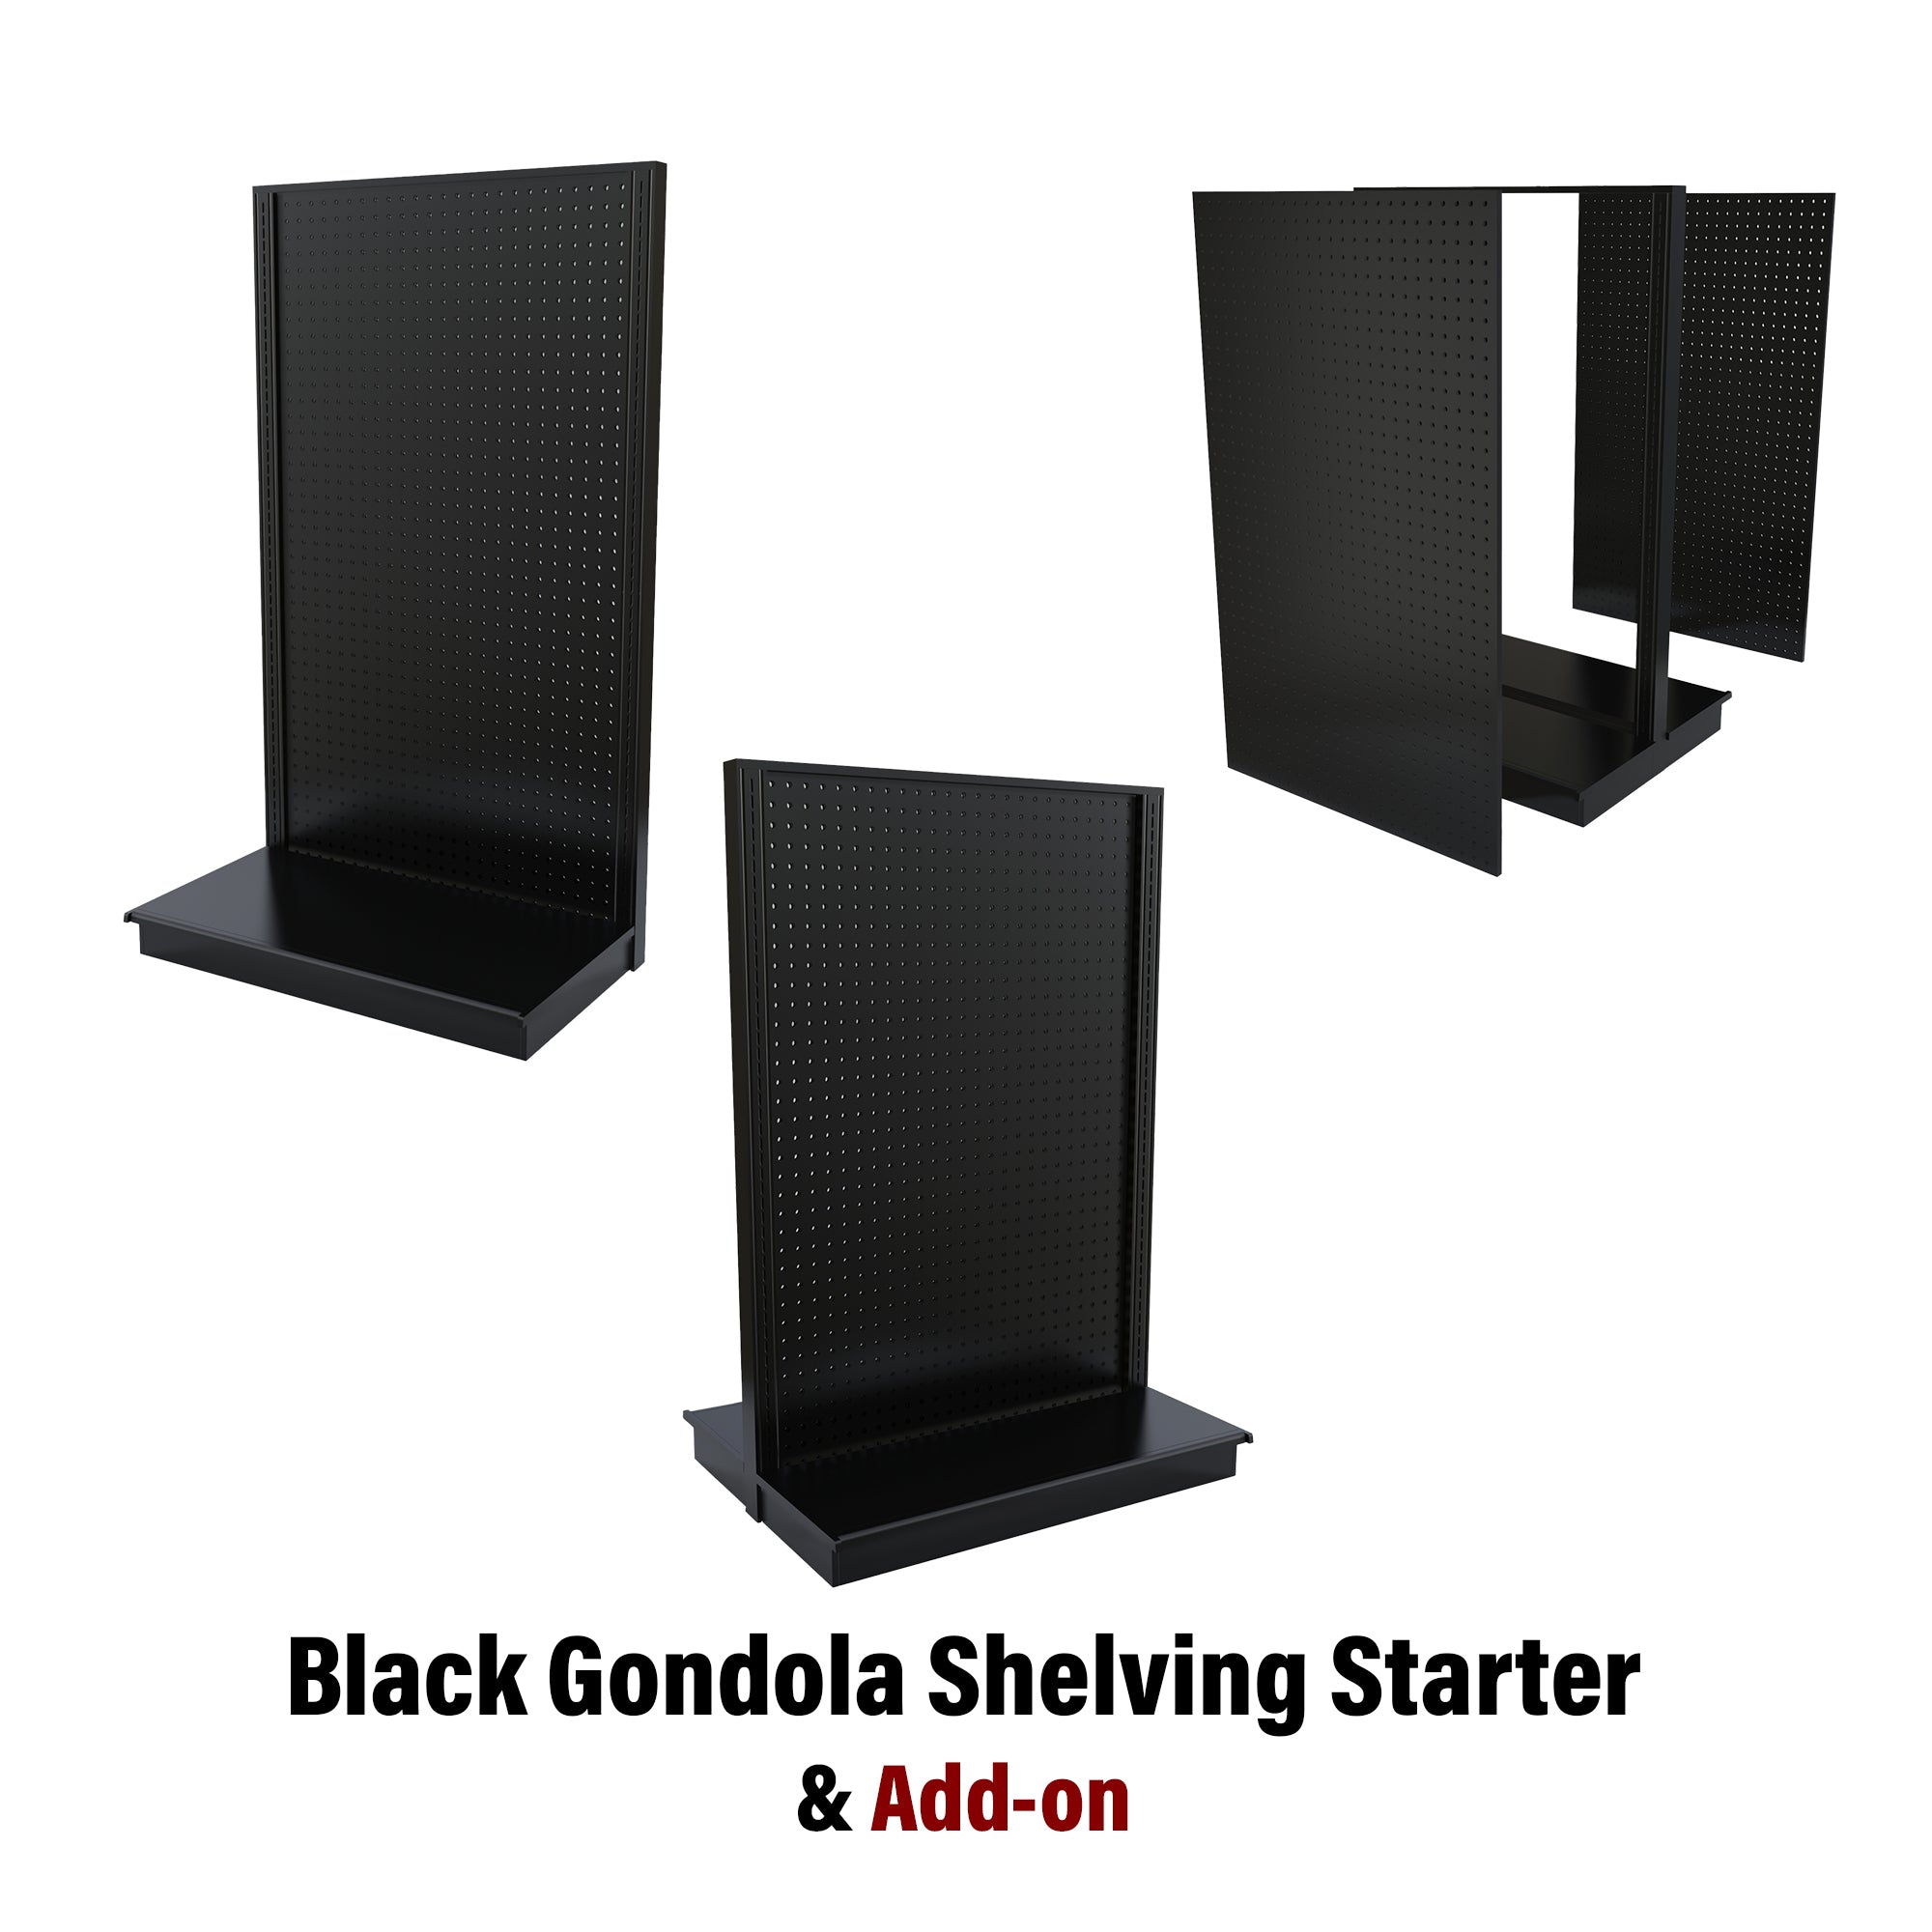 Black Gondola Shelving Starter And Add-on